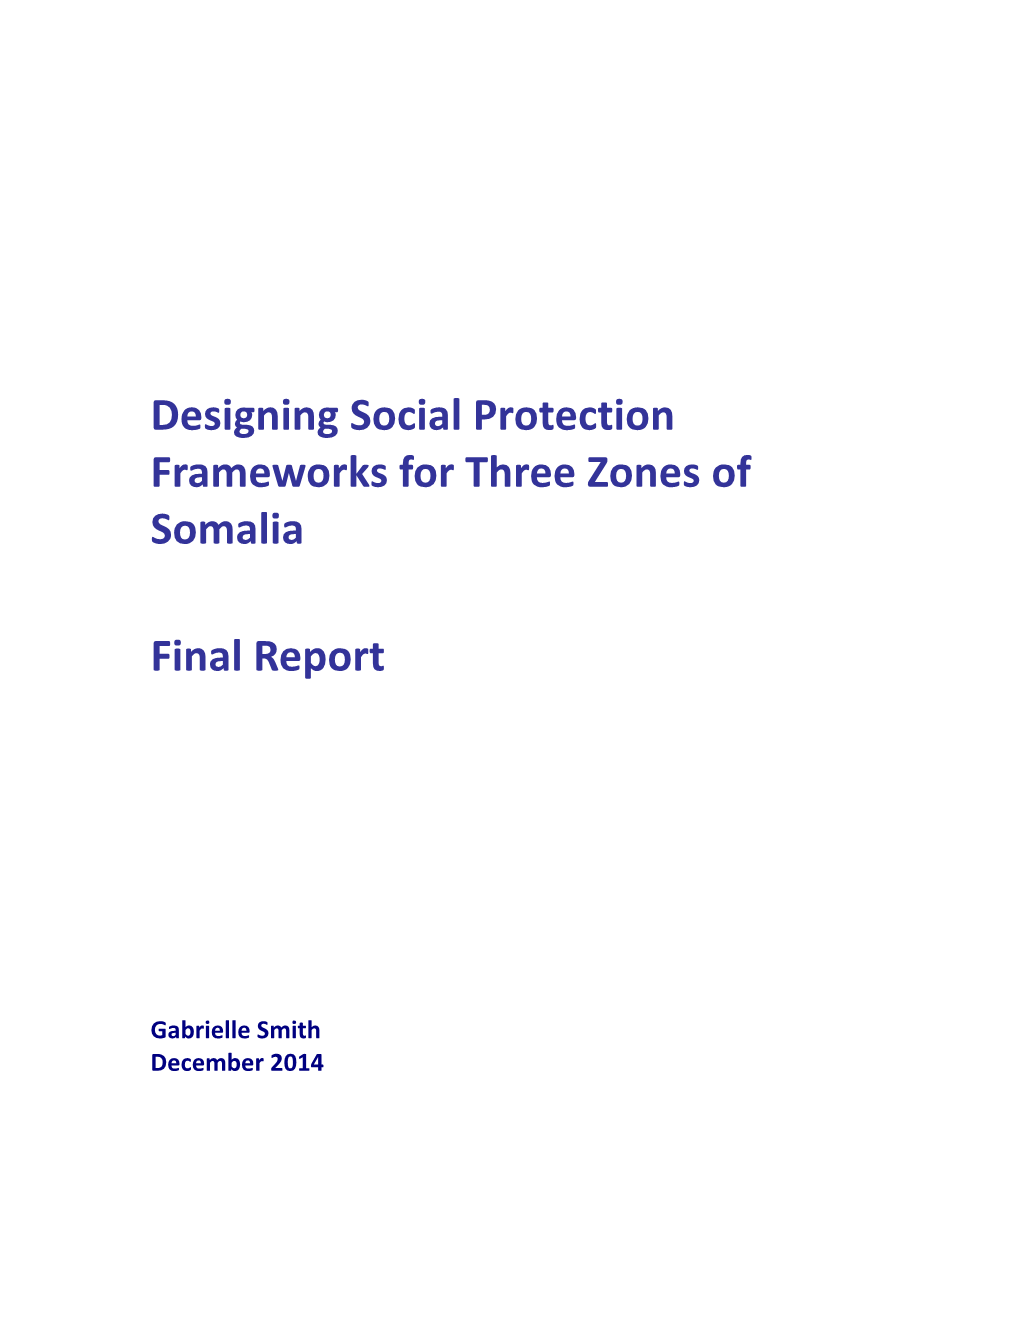 Designing Social Protection Frameworks for Three Zones of Somalia